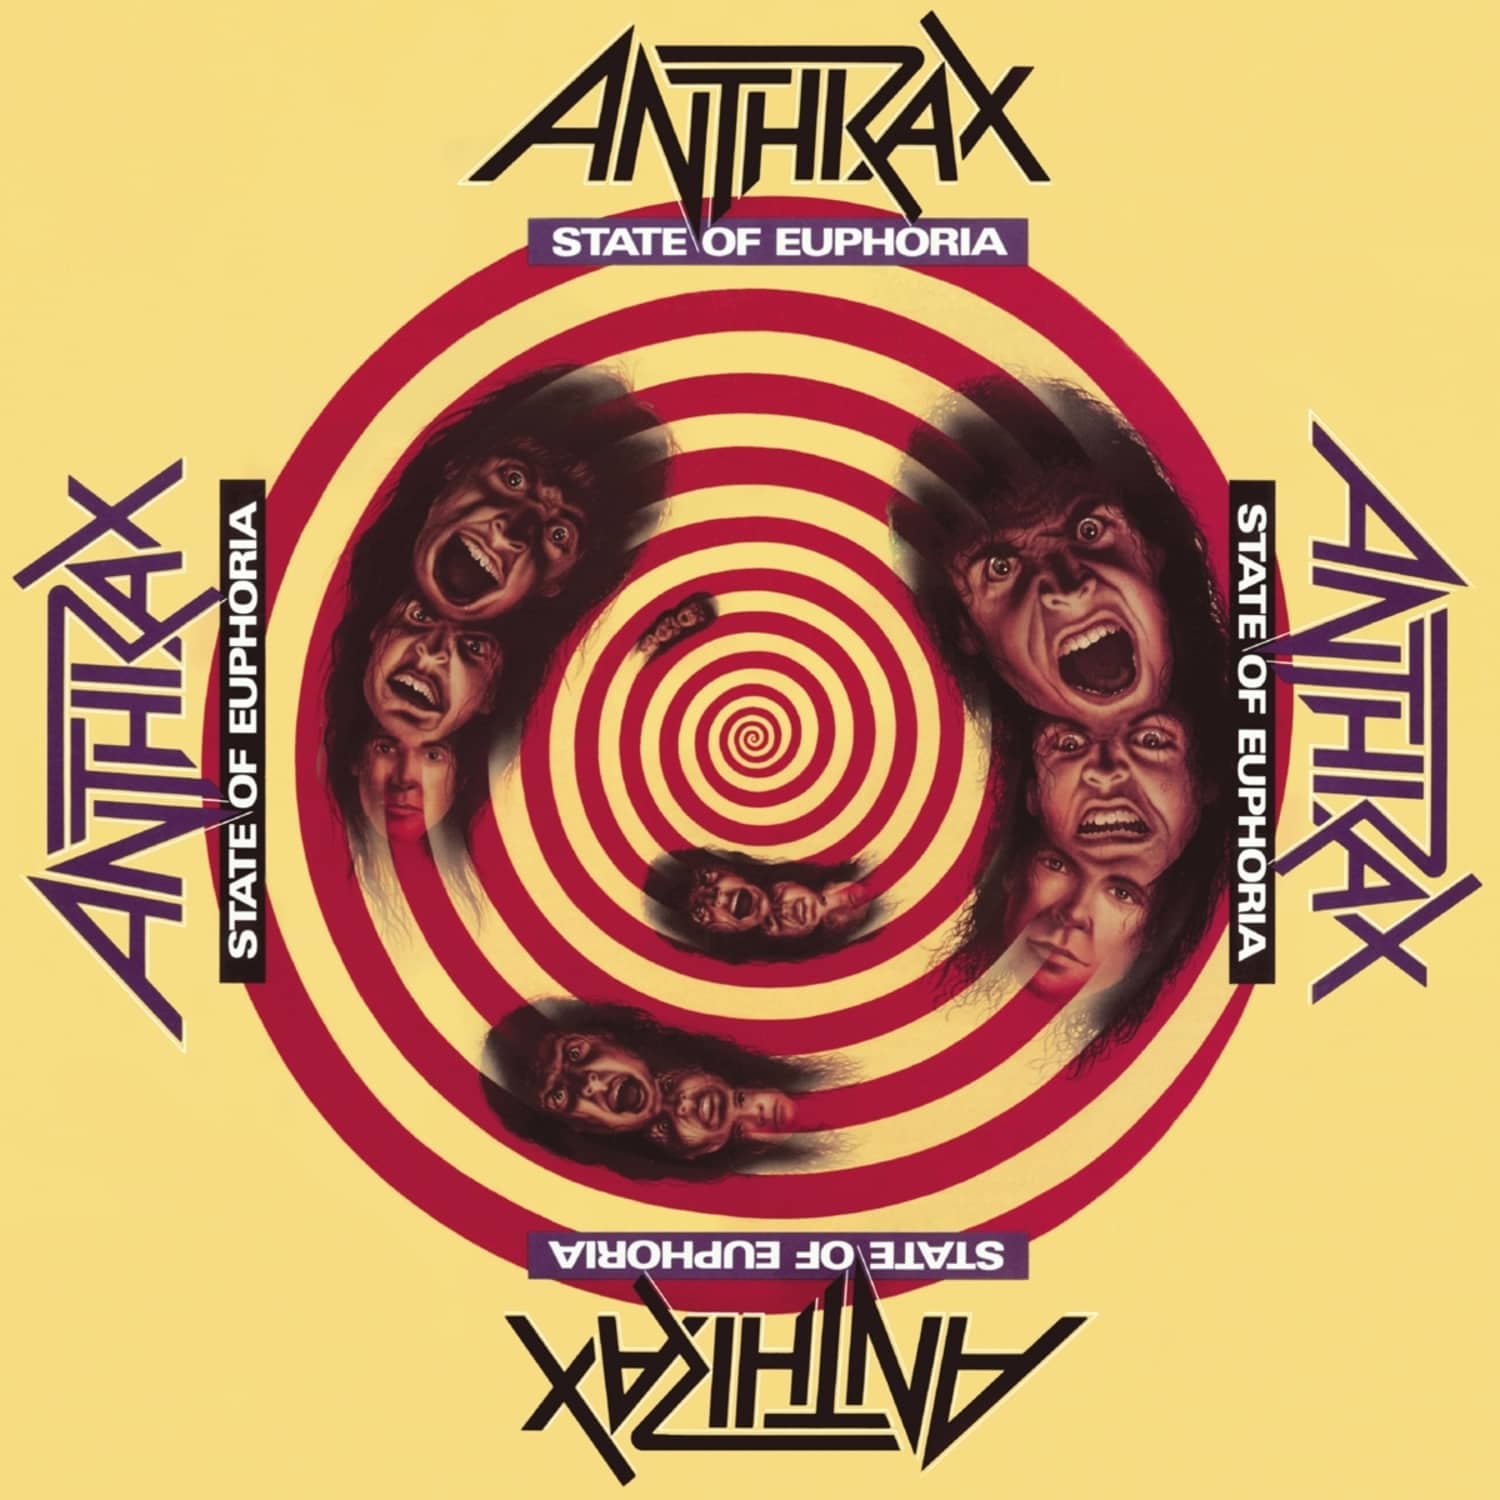 Anthrax - STATE OF EUPHORIA 